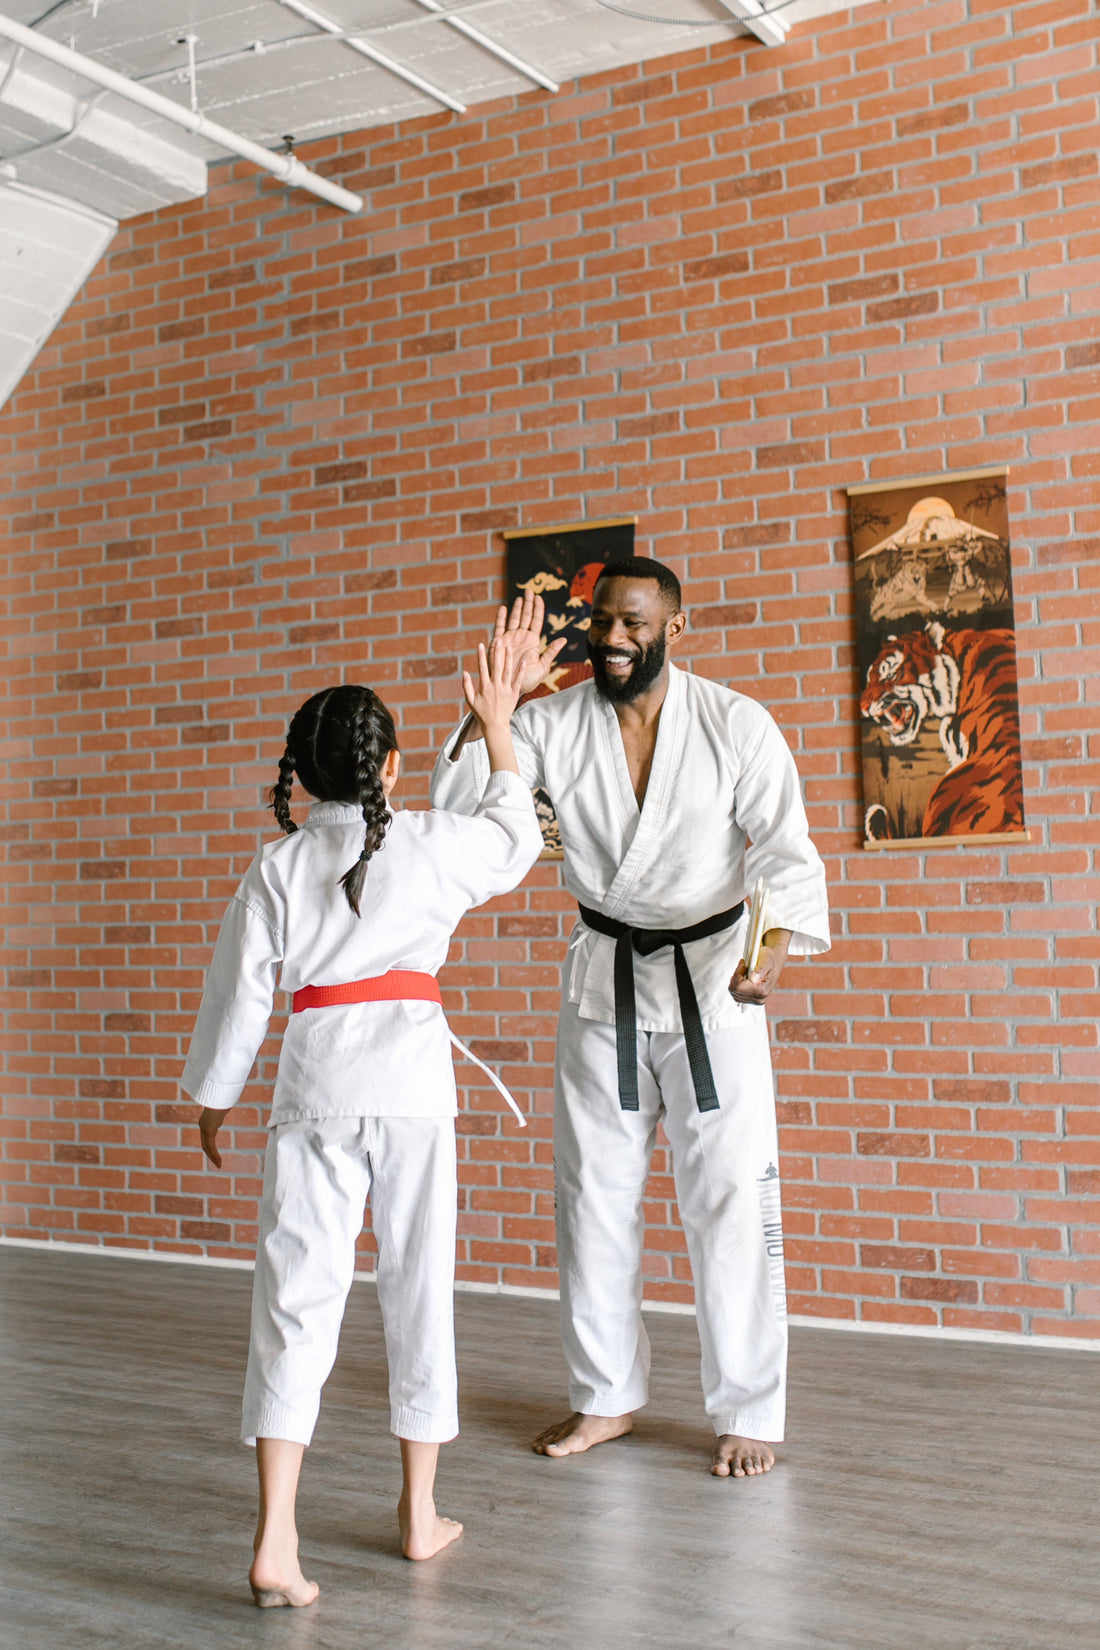 karate sparring gear